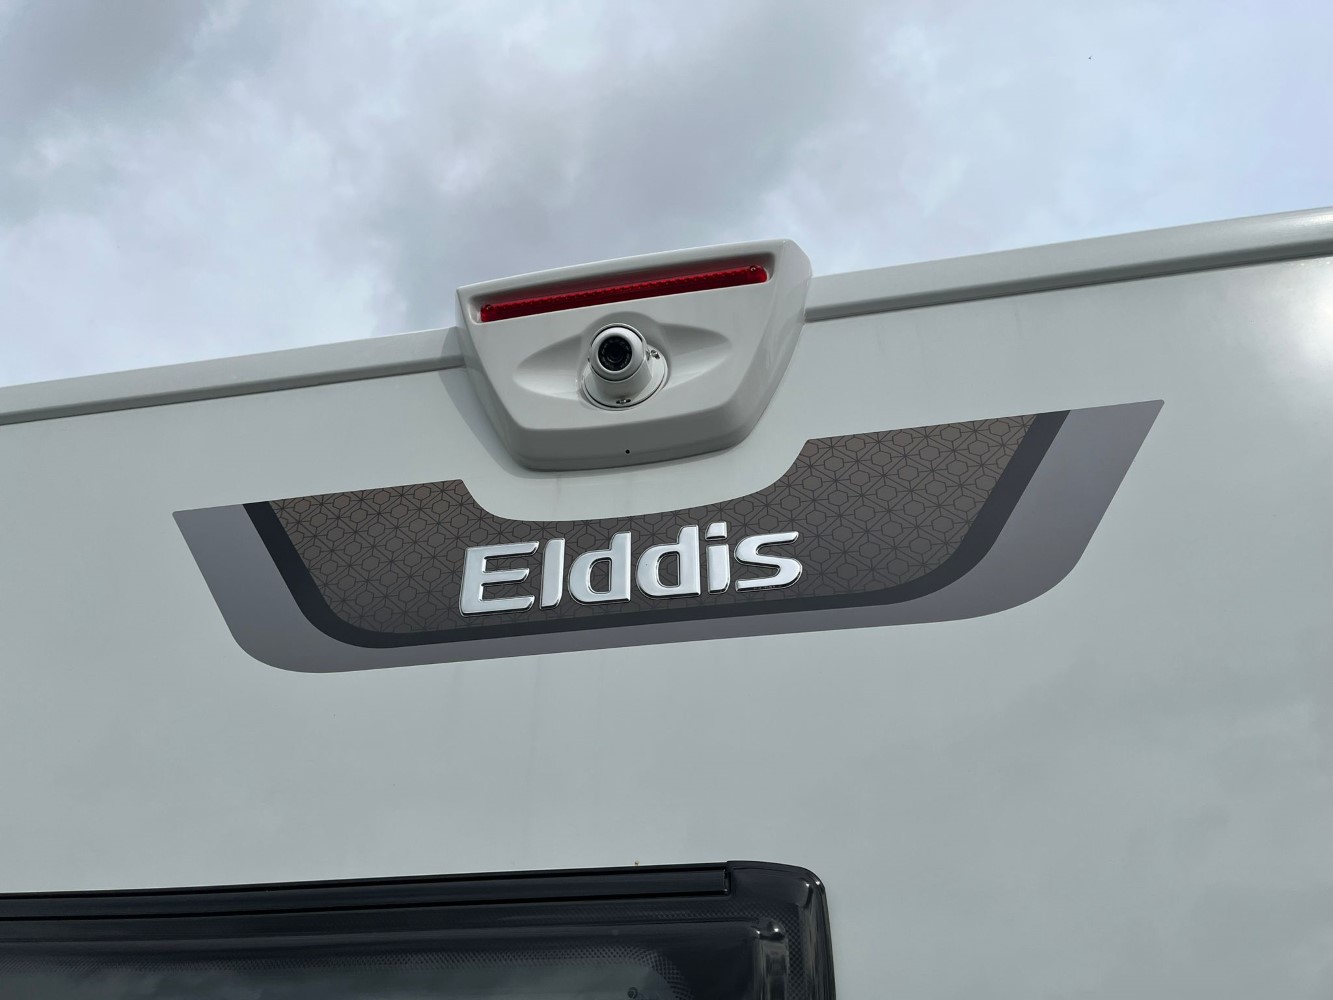 NEW Elddis Autoquest 115 - TLL Exclusive Edition